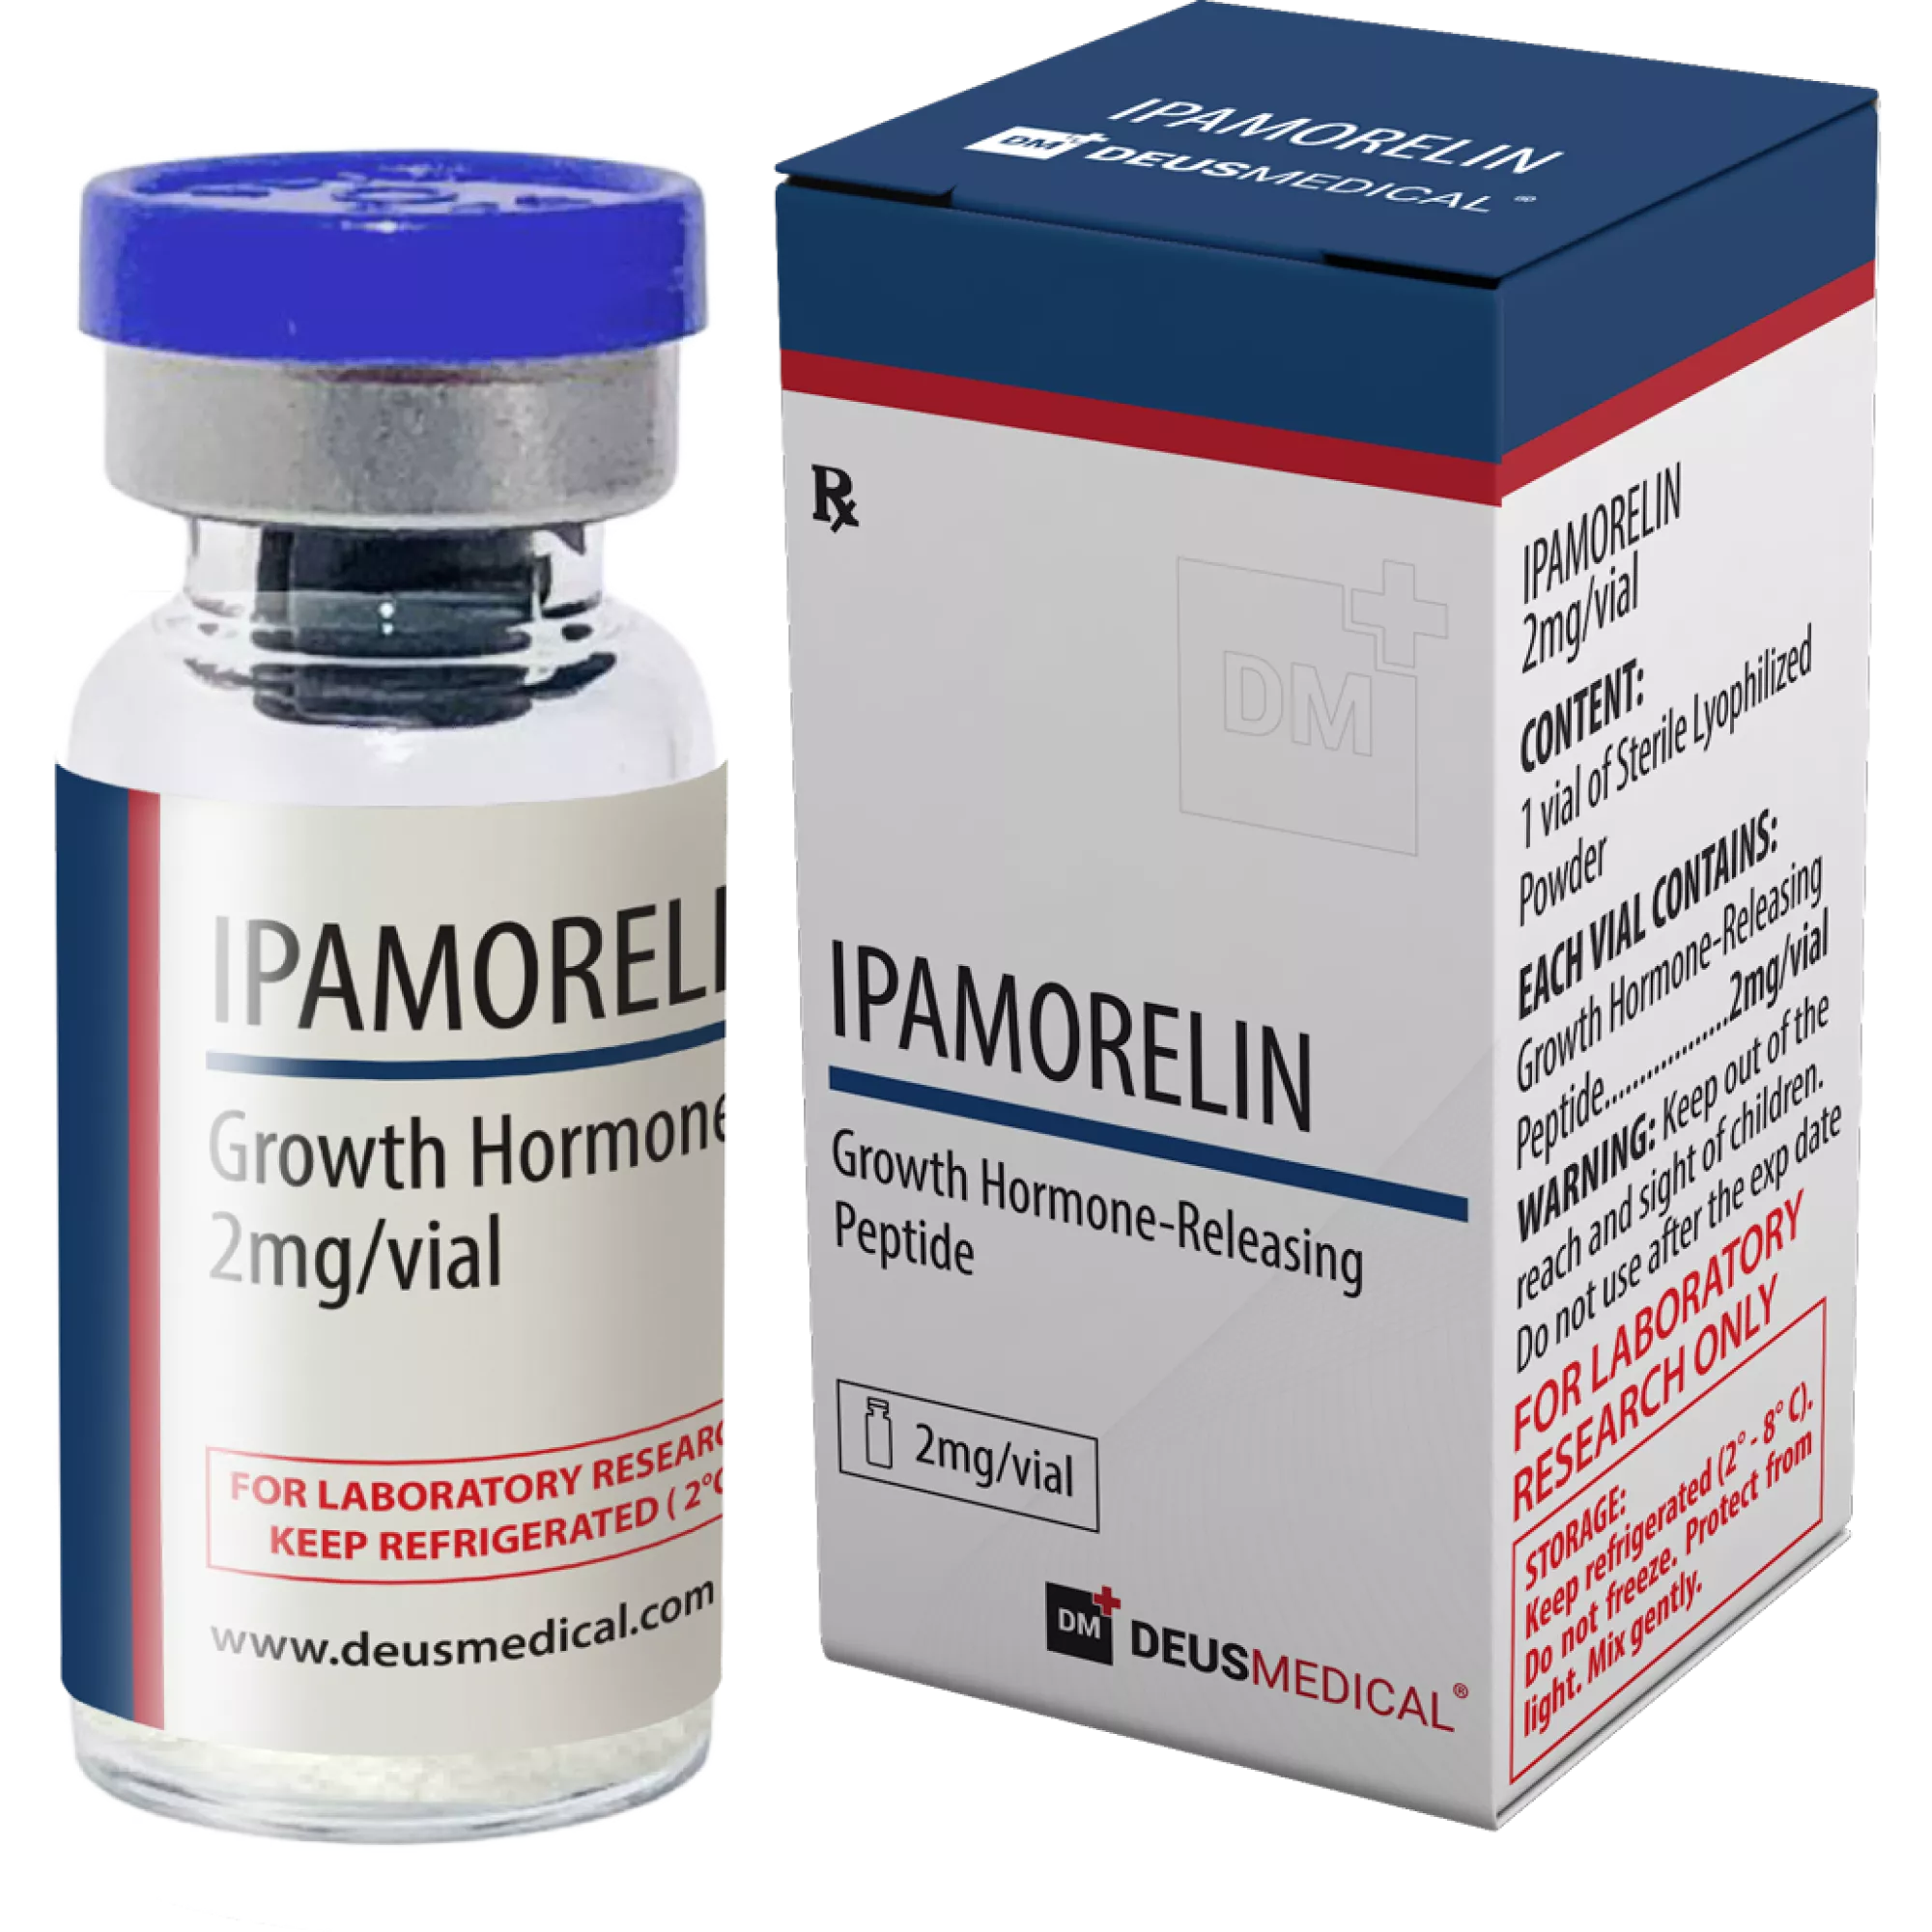 IPAMORELIN (Growth Hormone-Releasing Peptide), Deus Medical, köp steroider online - www.deuspower.shop